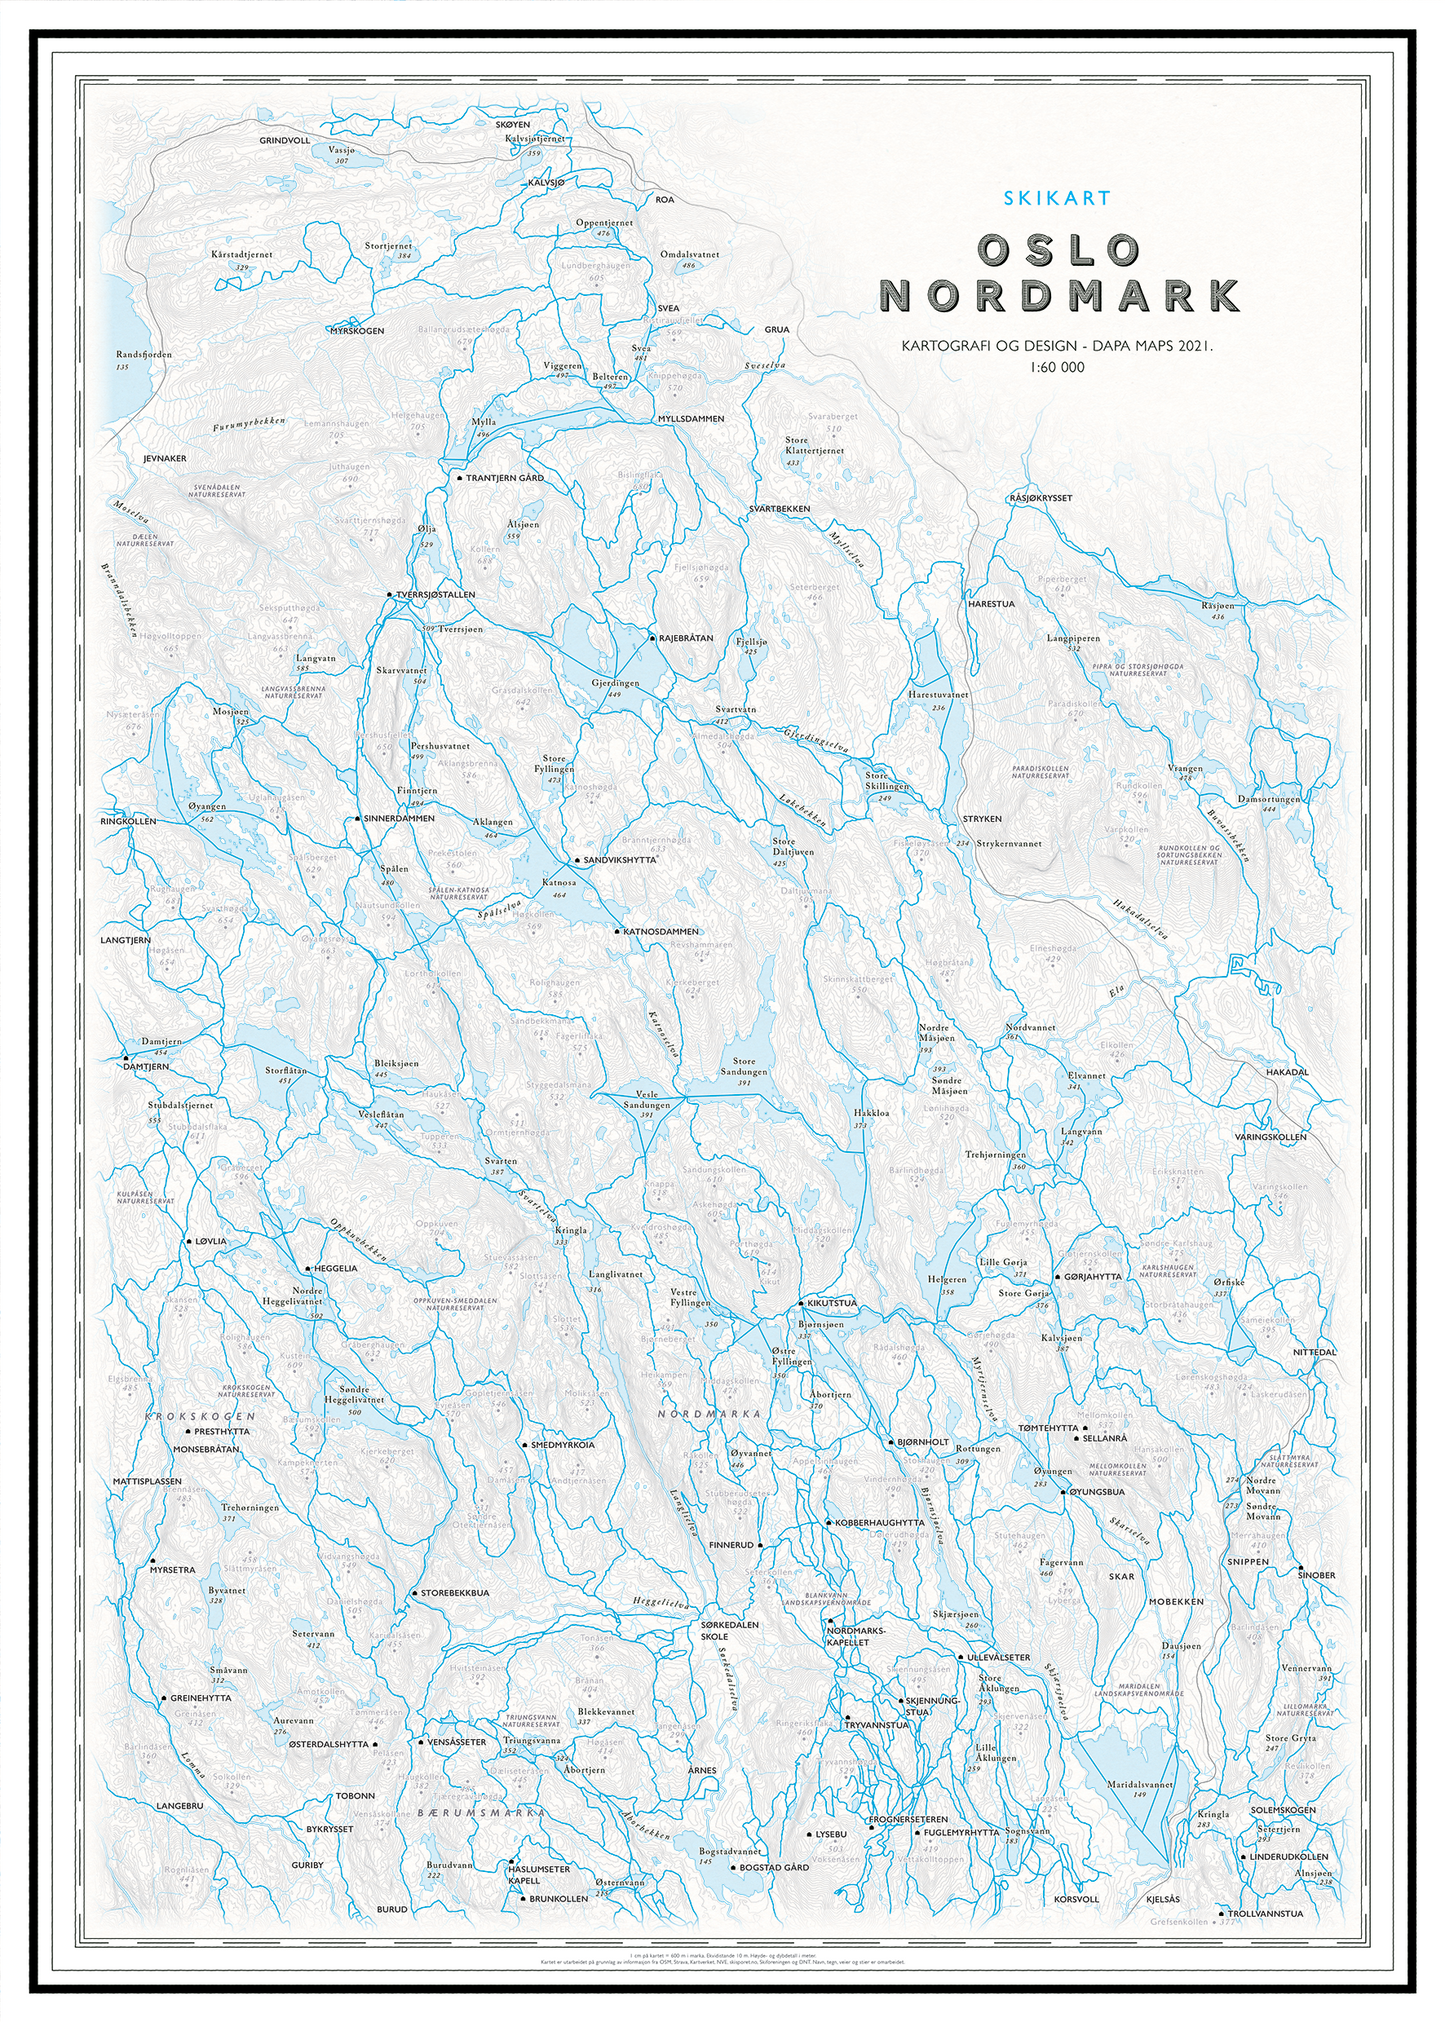 Skikart Oslo Nordmark